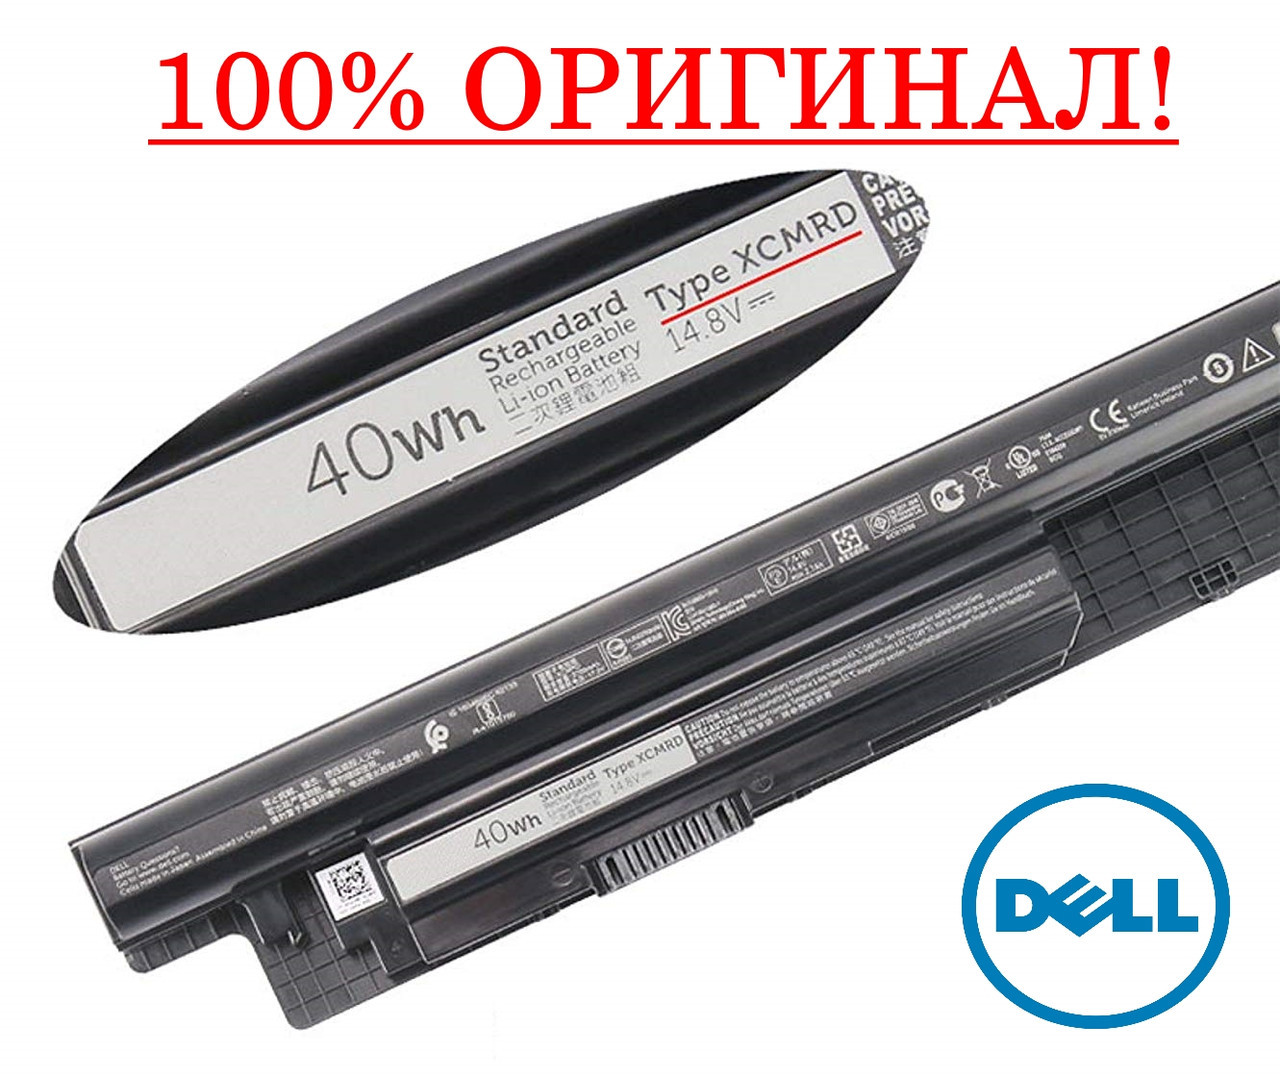 Оригінальна батарея для ноутбука Dell Inspiron 5421, 5437 - XCMRD, 14.8 V 2630mAh - Акумулятор, АКБ